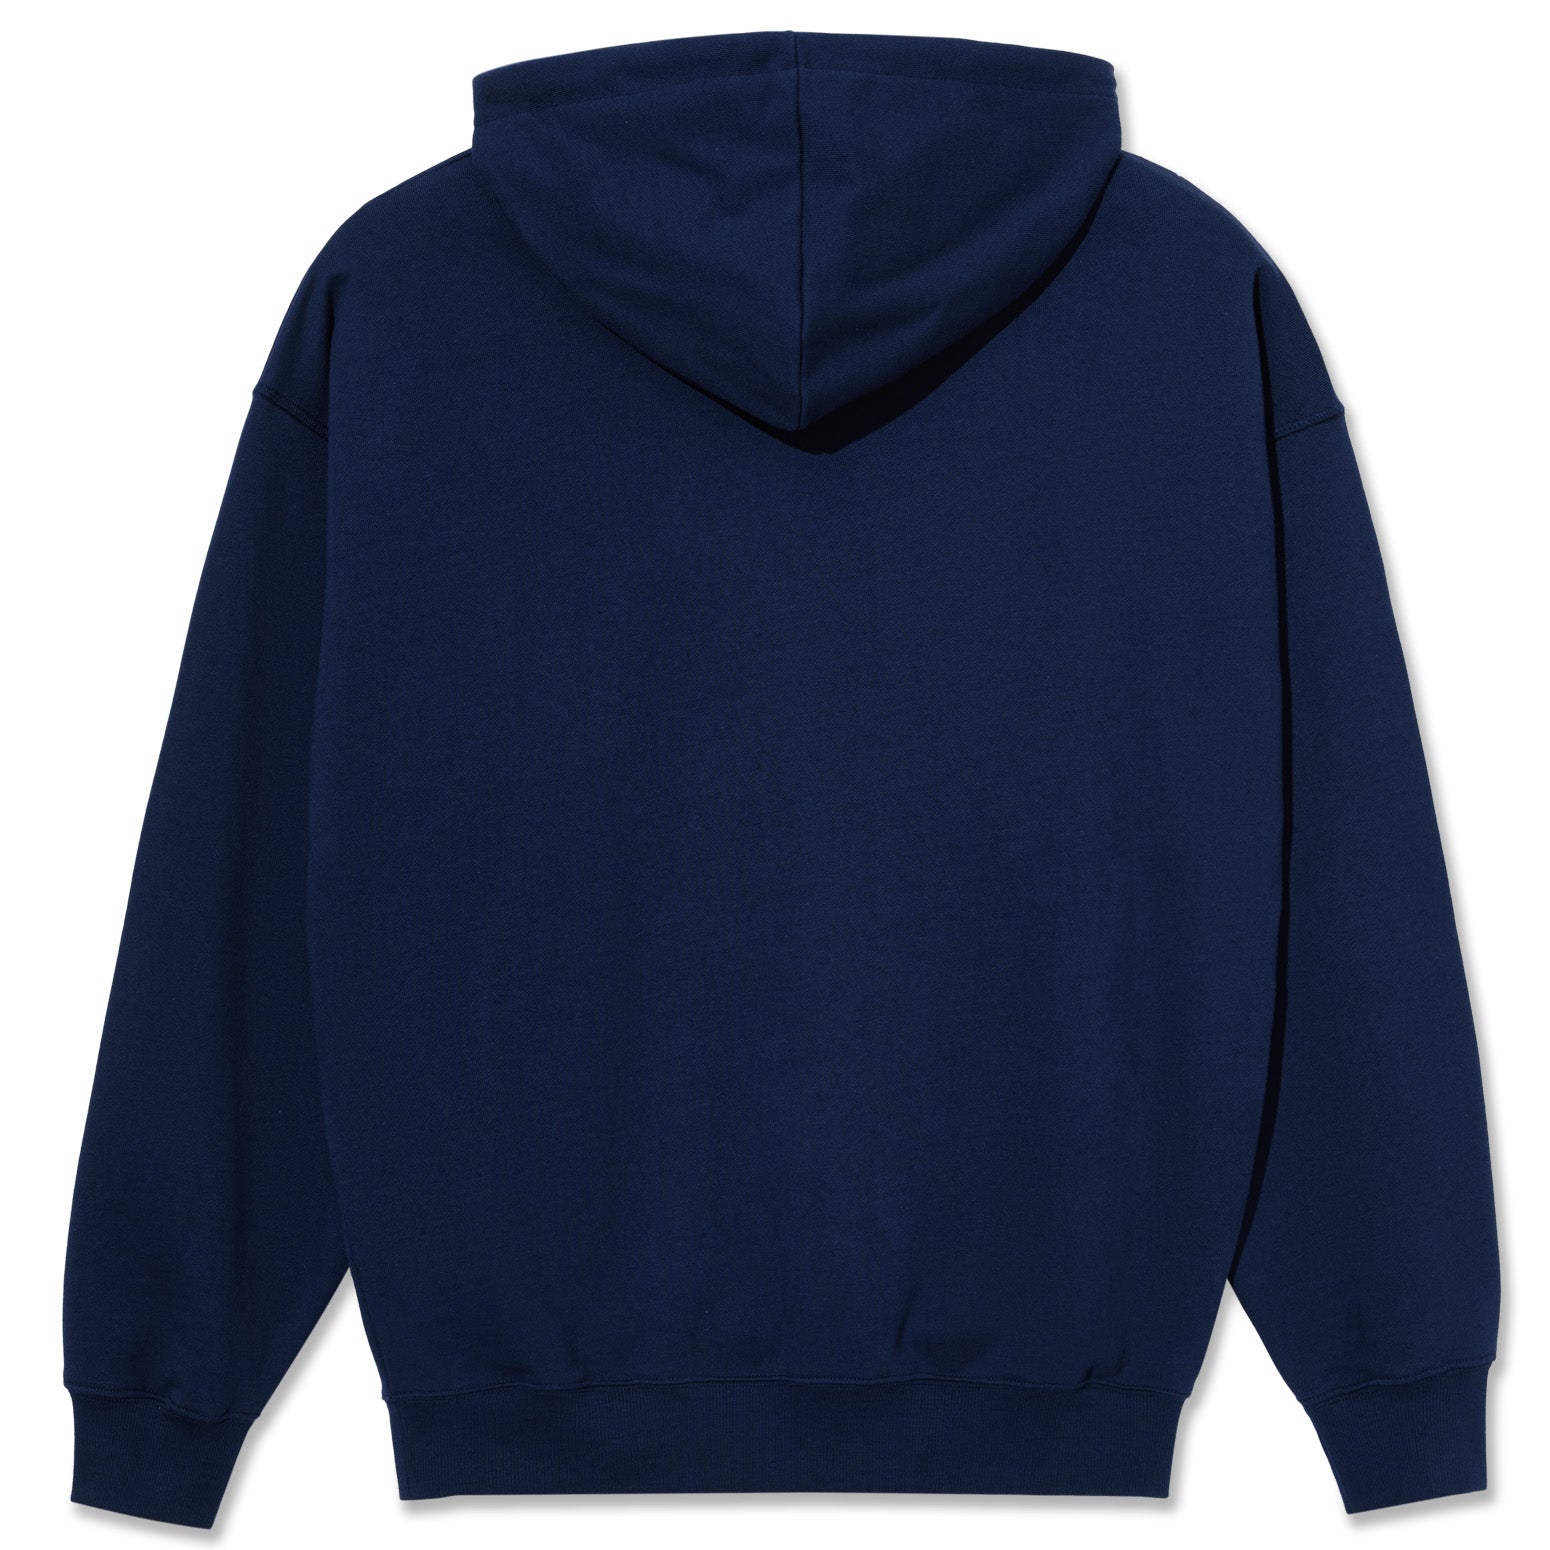 Polar Skate Co. Frank Hooded Sweatshirt Dark Blue